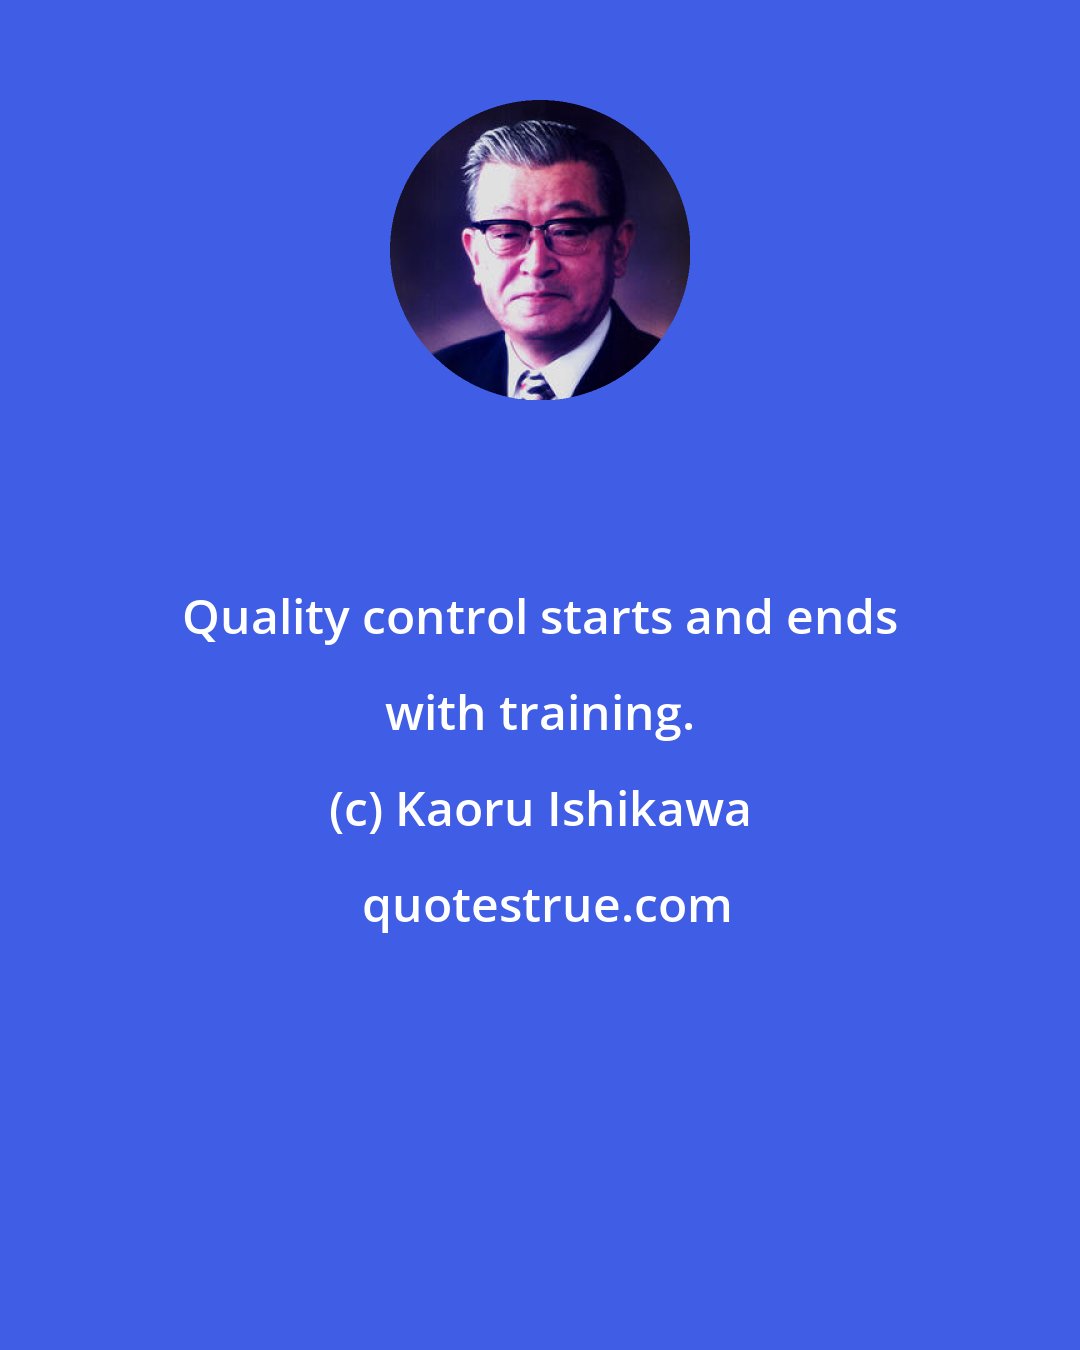 Kaoru Ishikawa: Quality control starts and ends with training.